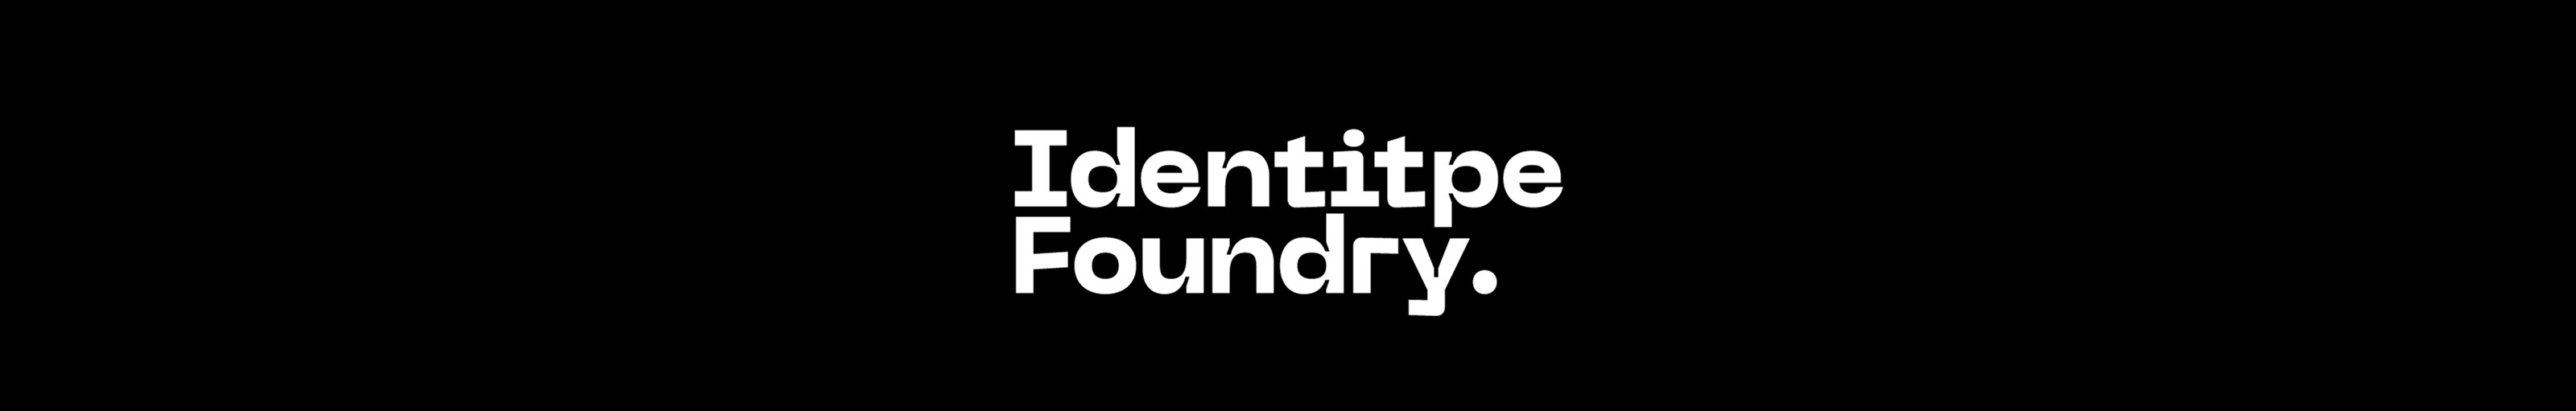 Identitype Co's profile banner